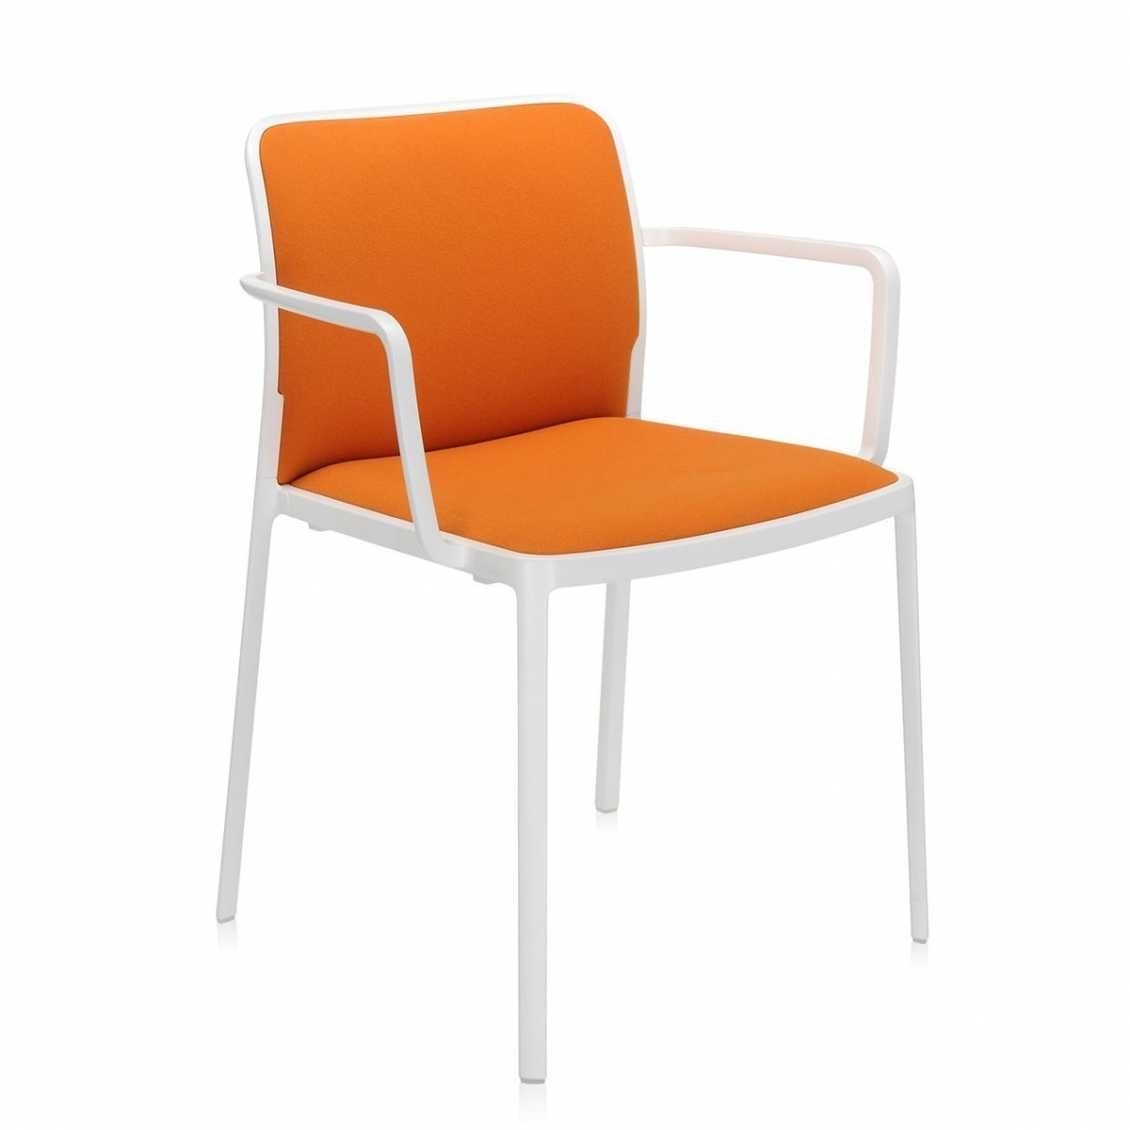 https://www.fundesign.nl/media/catalog/product/a/u/audrey-soft-armleuning-wit-oranje_1.jpg